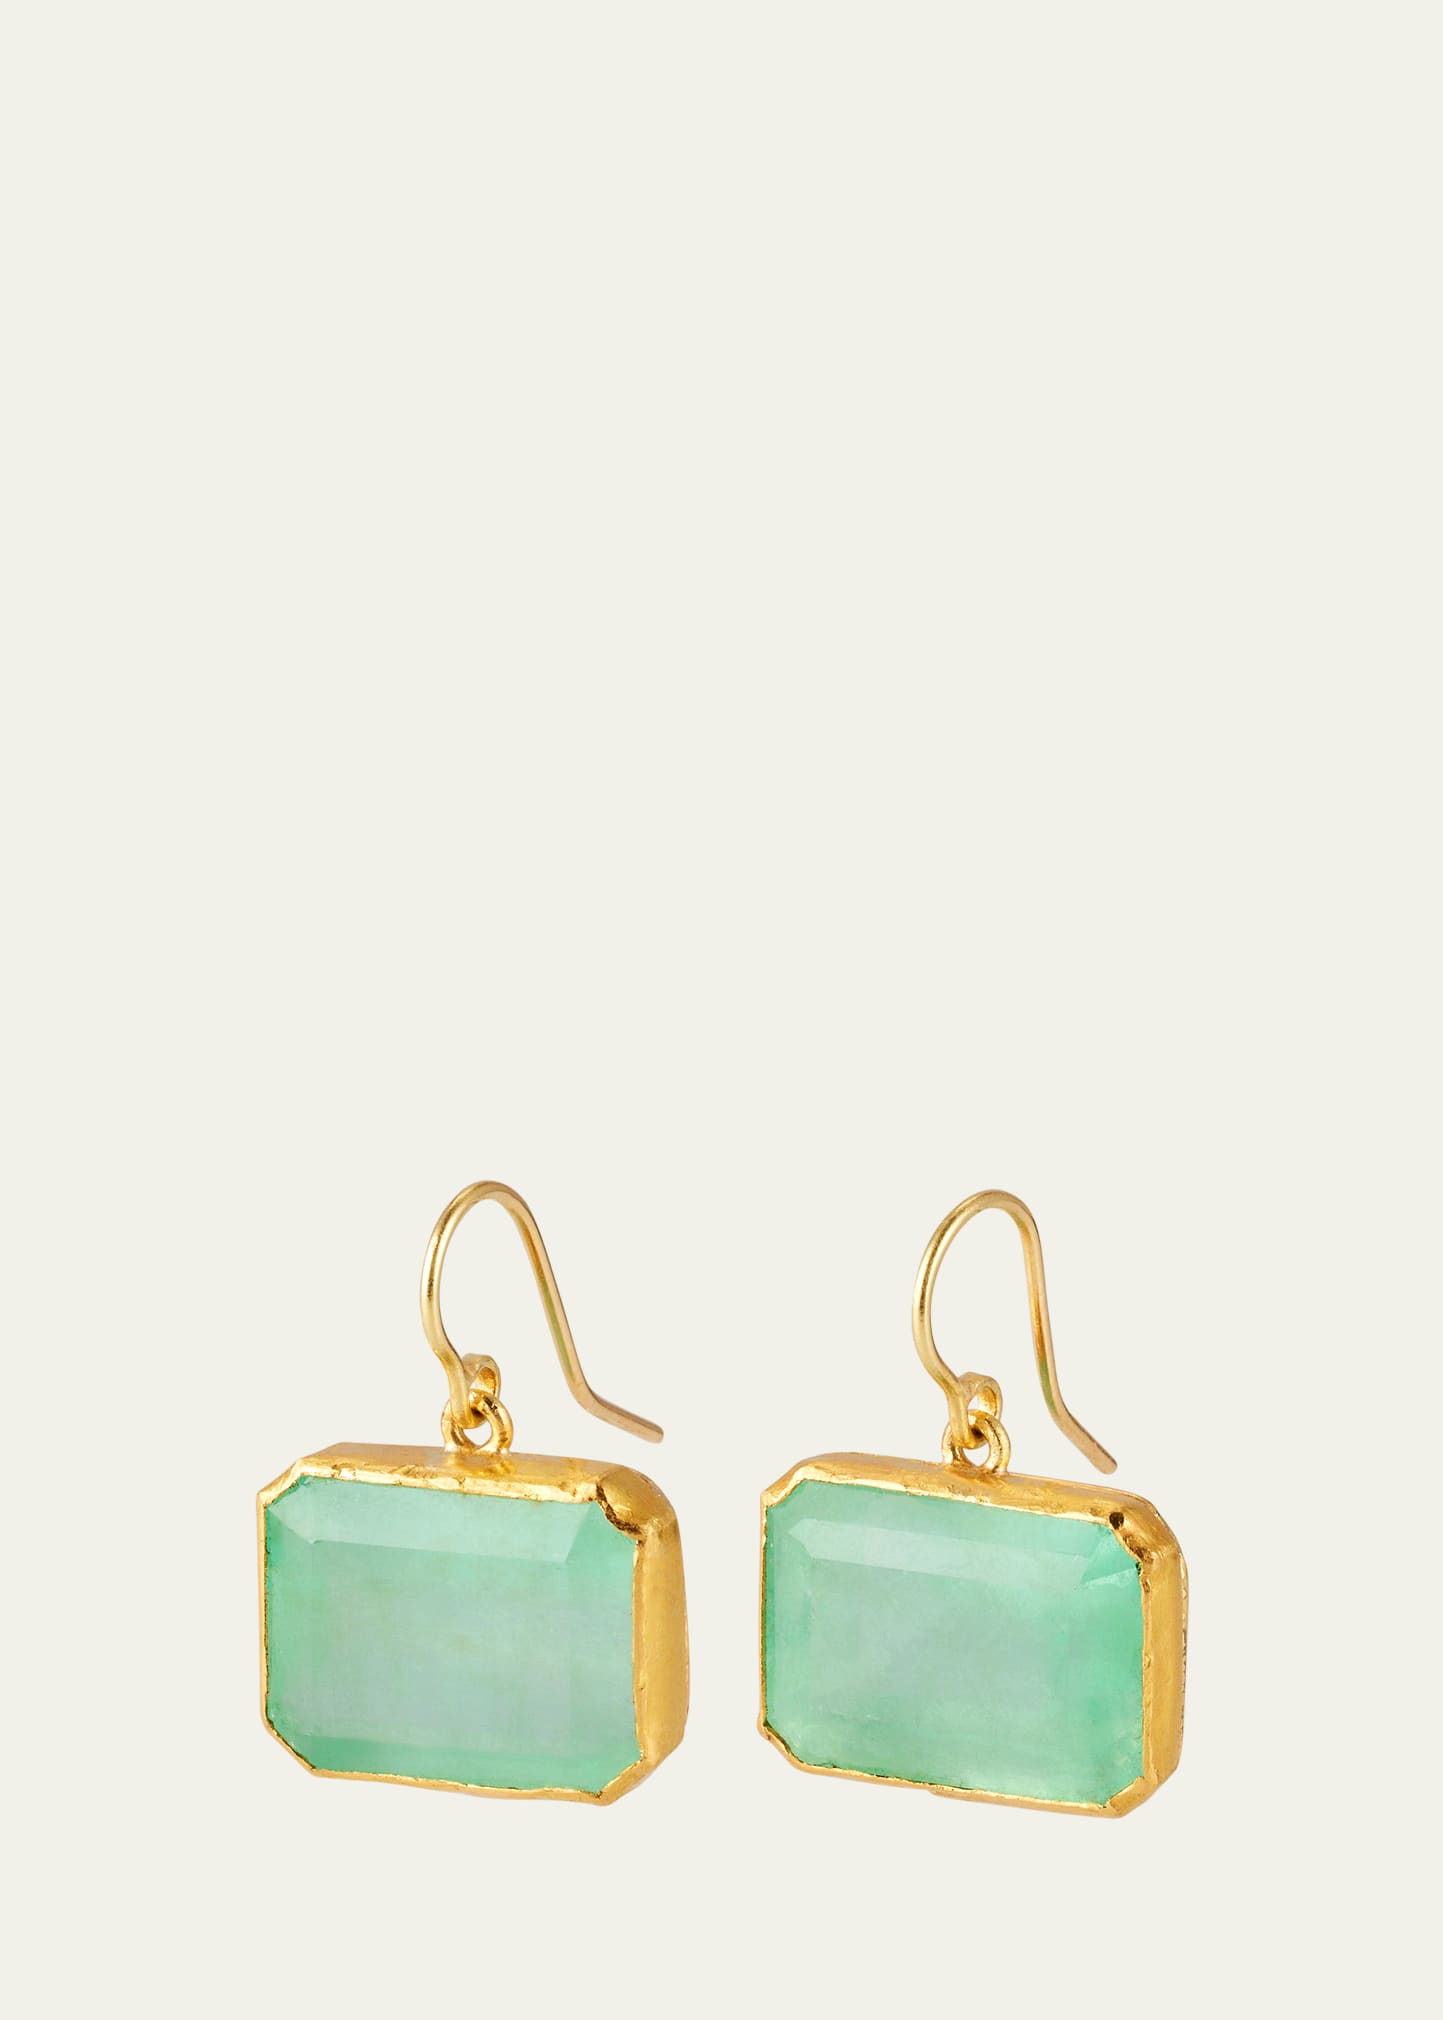 22K and 18K Yellow Gold Single Drop Rectangular Colombian Emerald Earrings